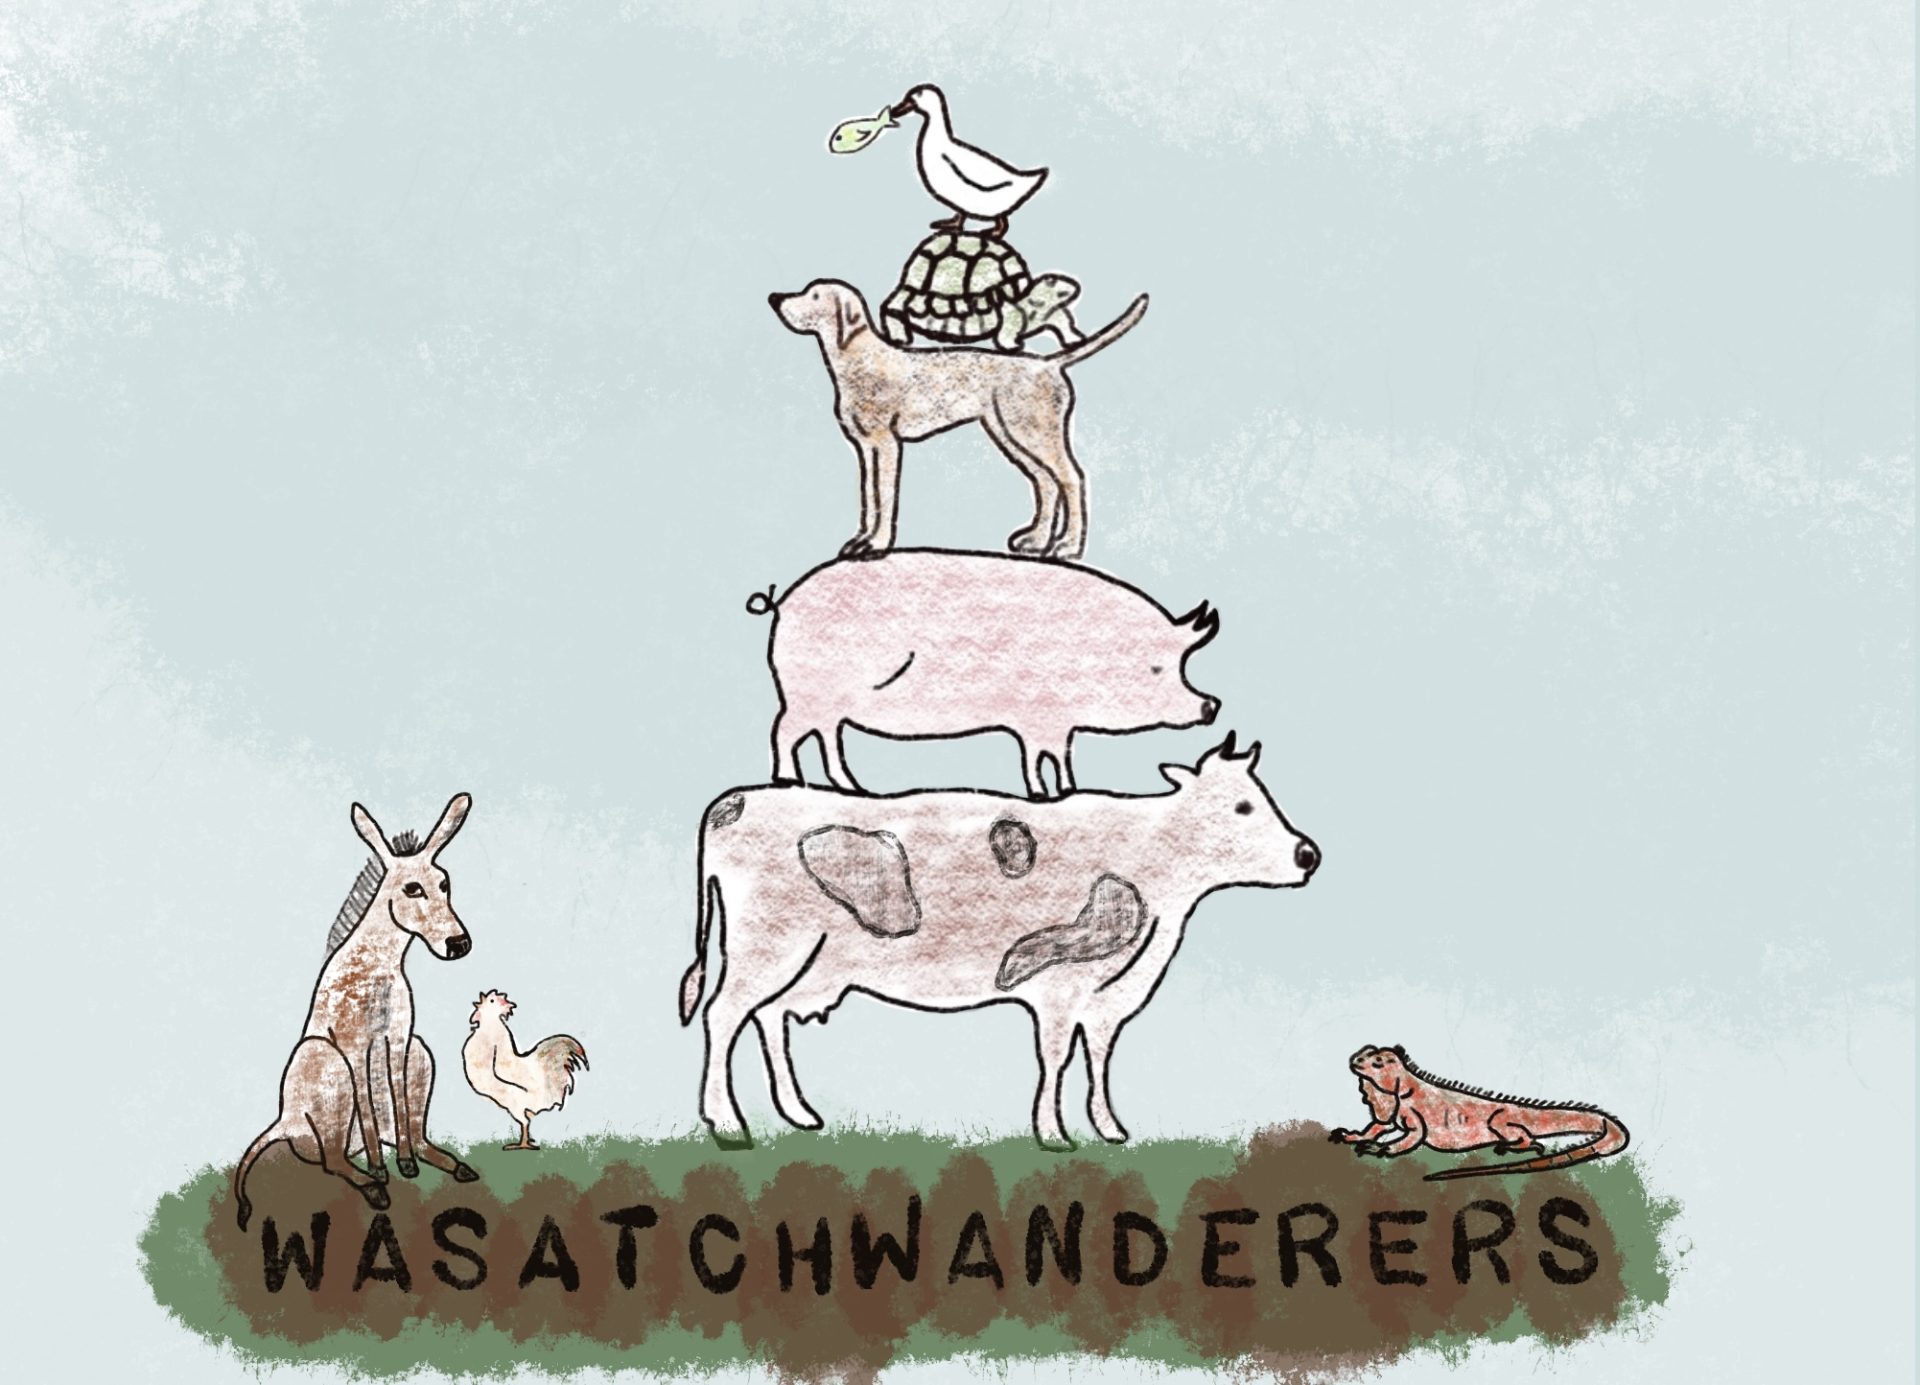 Wasatch Wanderers